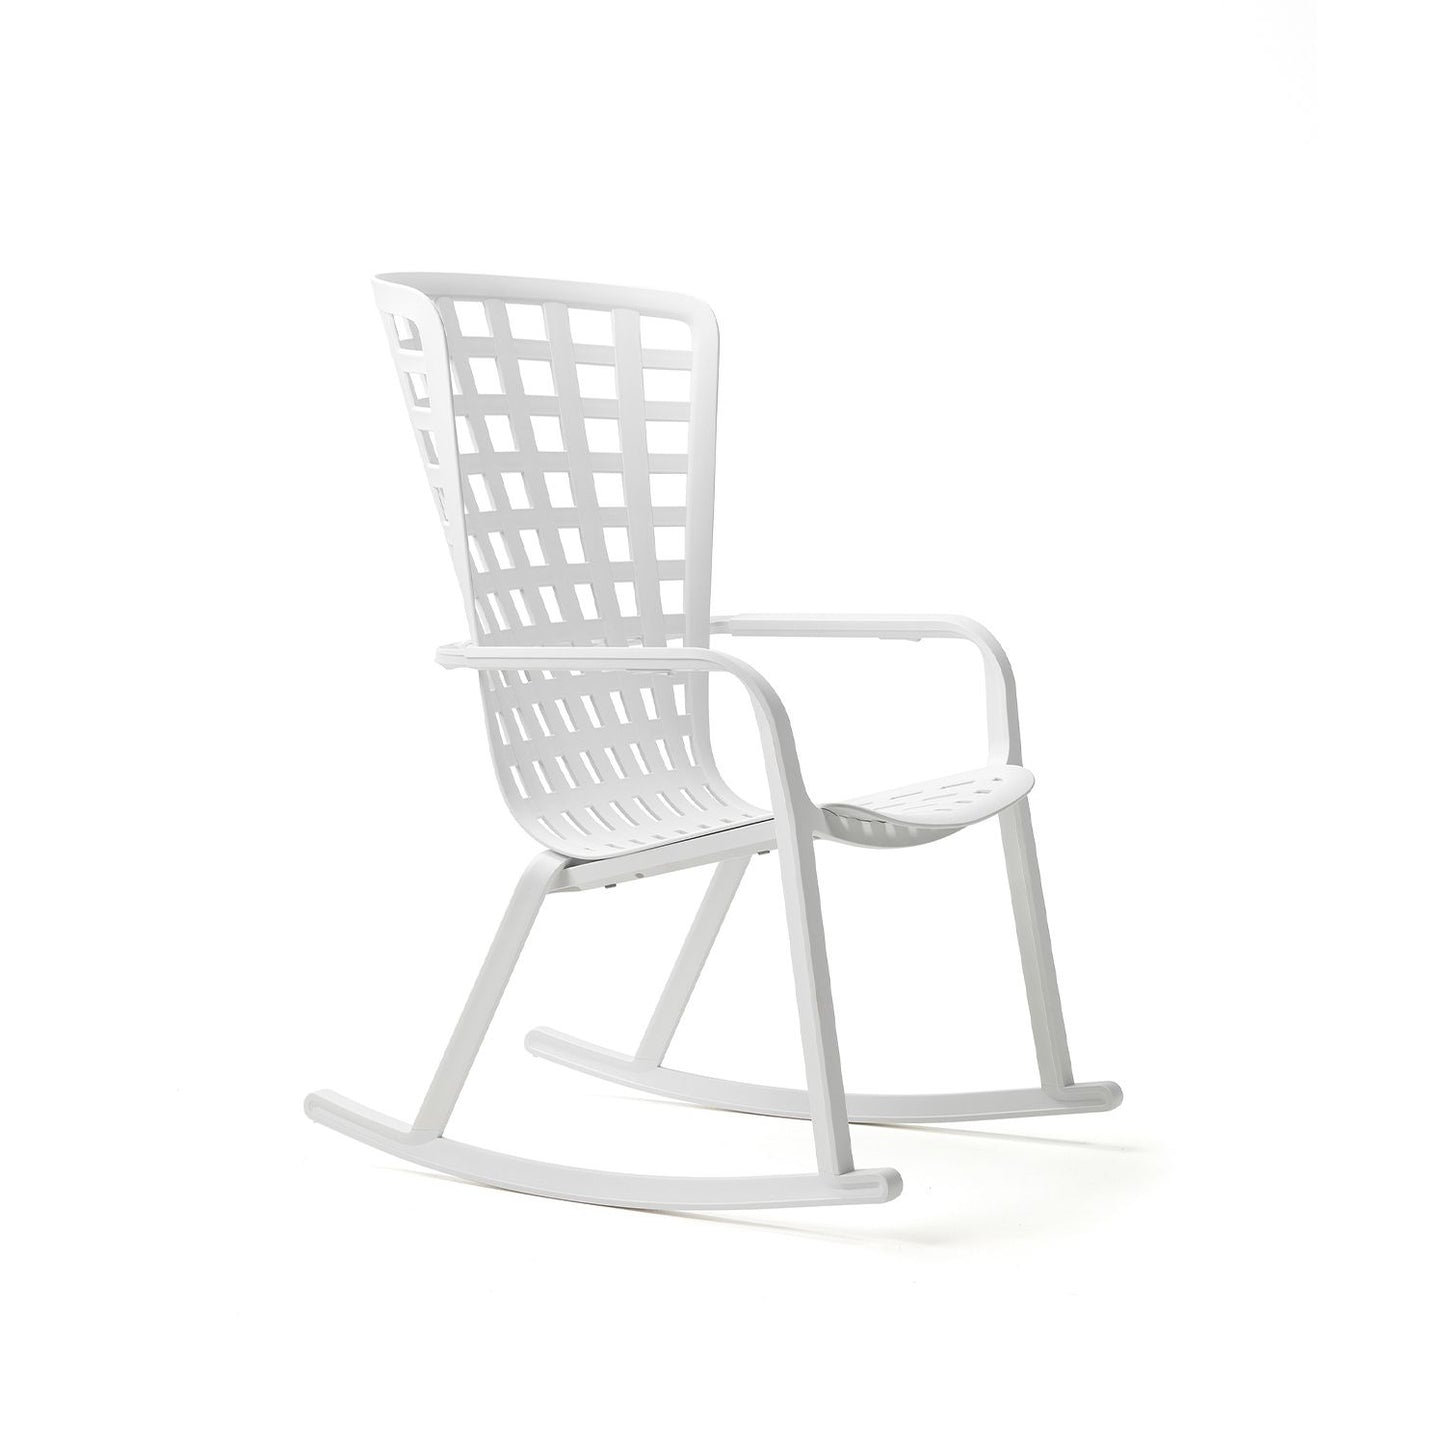 Folio Rocking Chair By Nardi - White